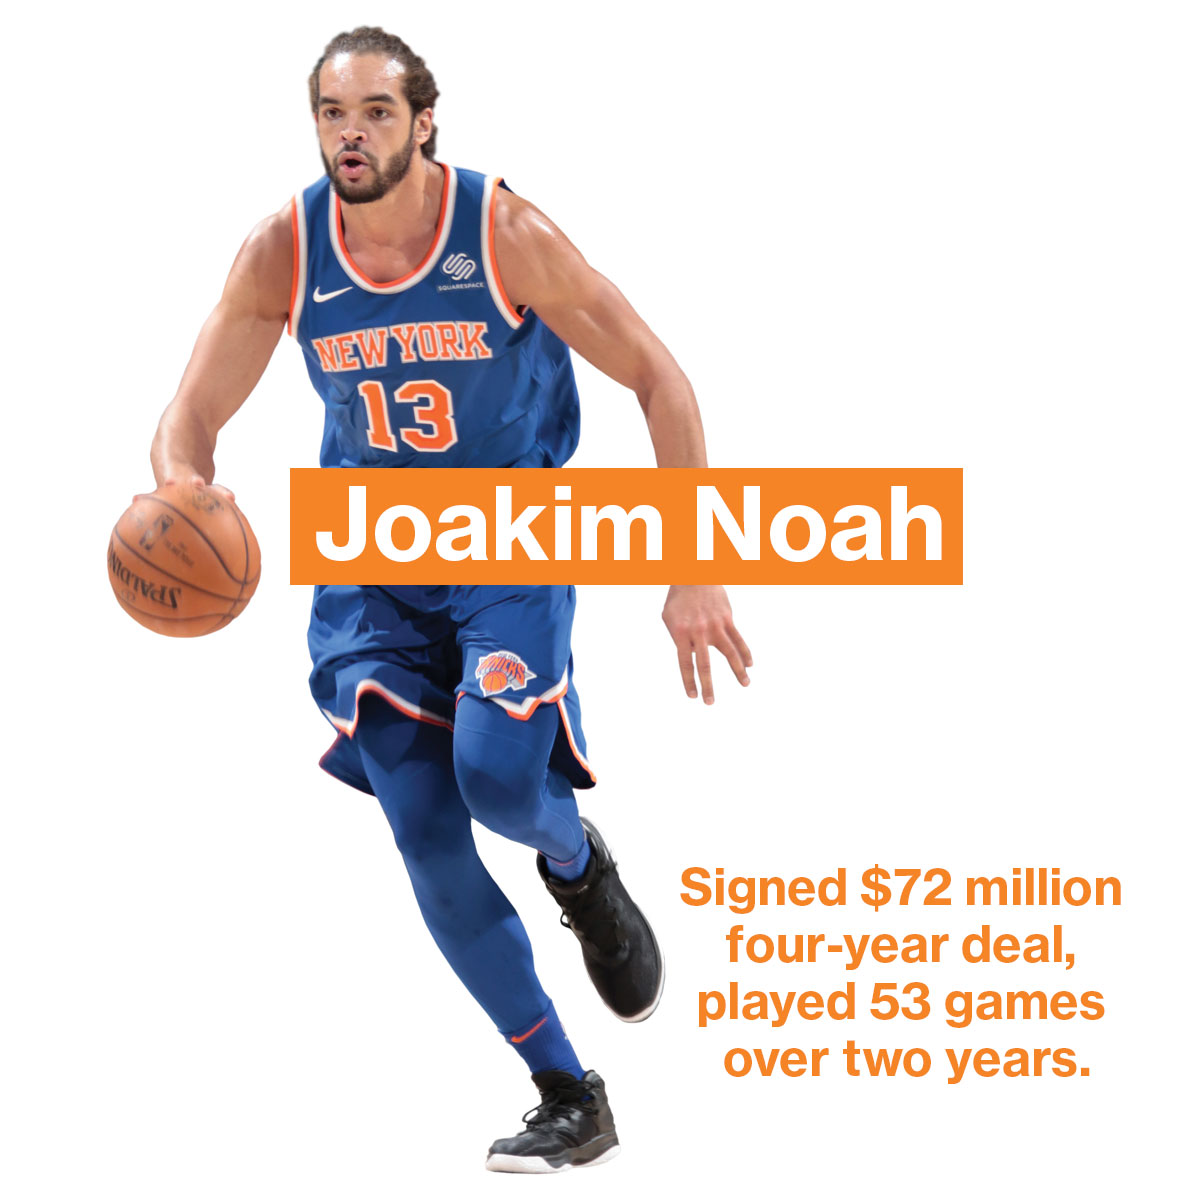 NBA Top Shot & Joakim Noah: Building the Blockchain Connection